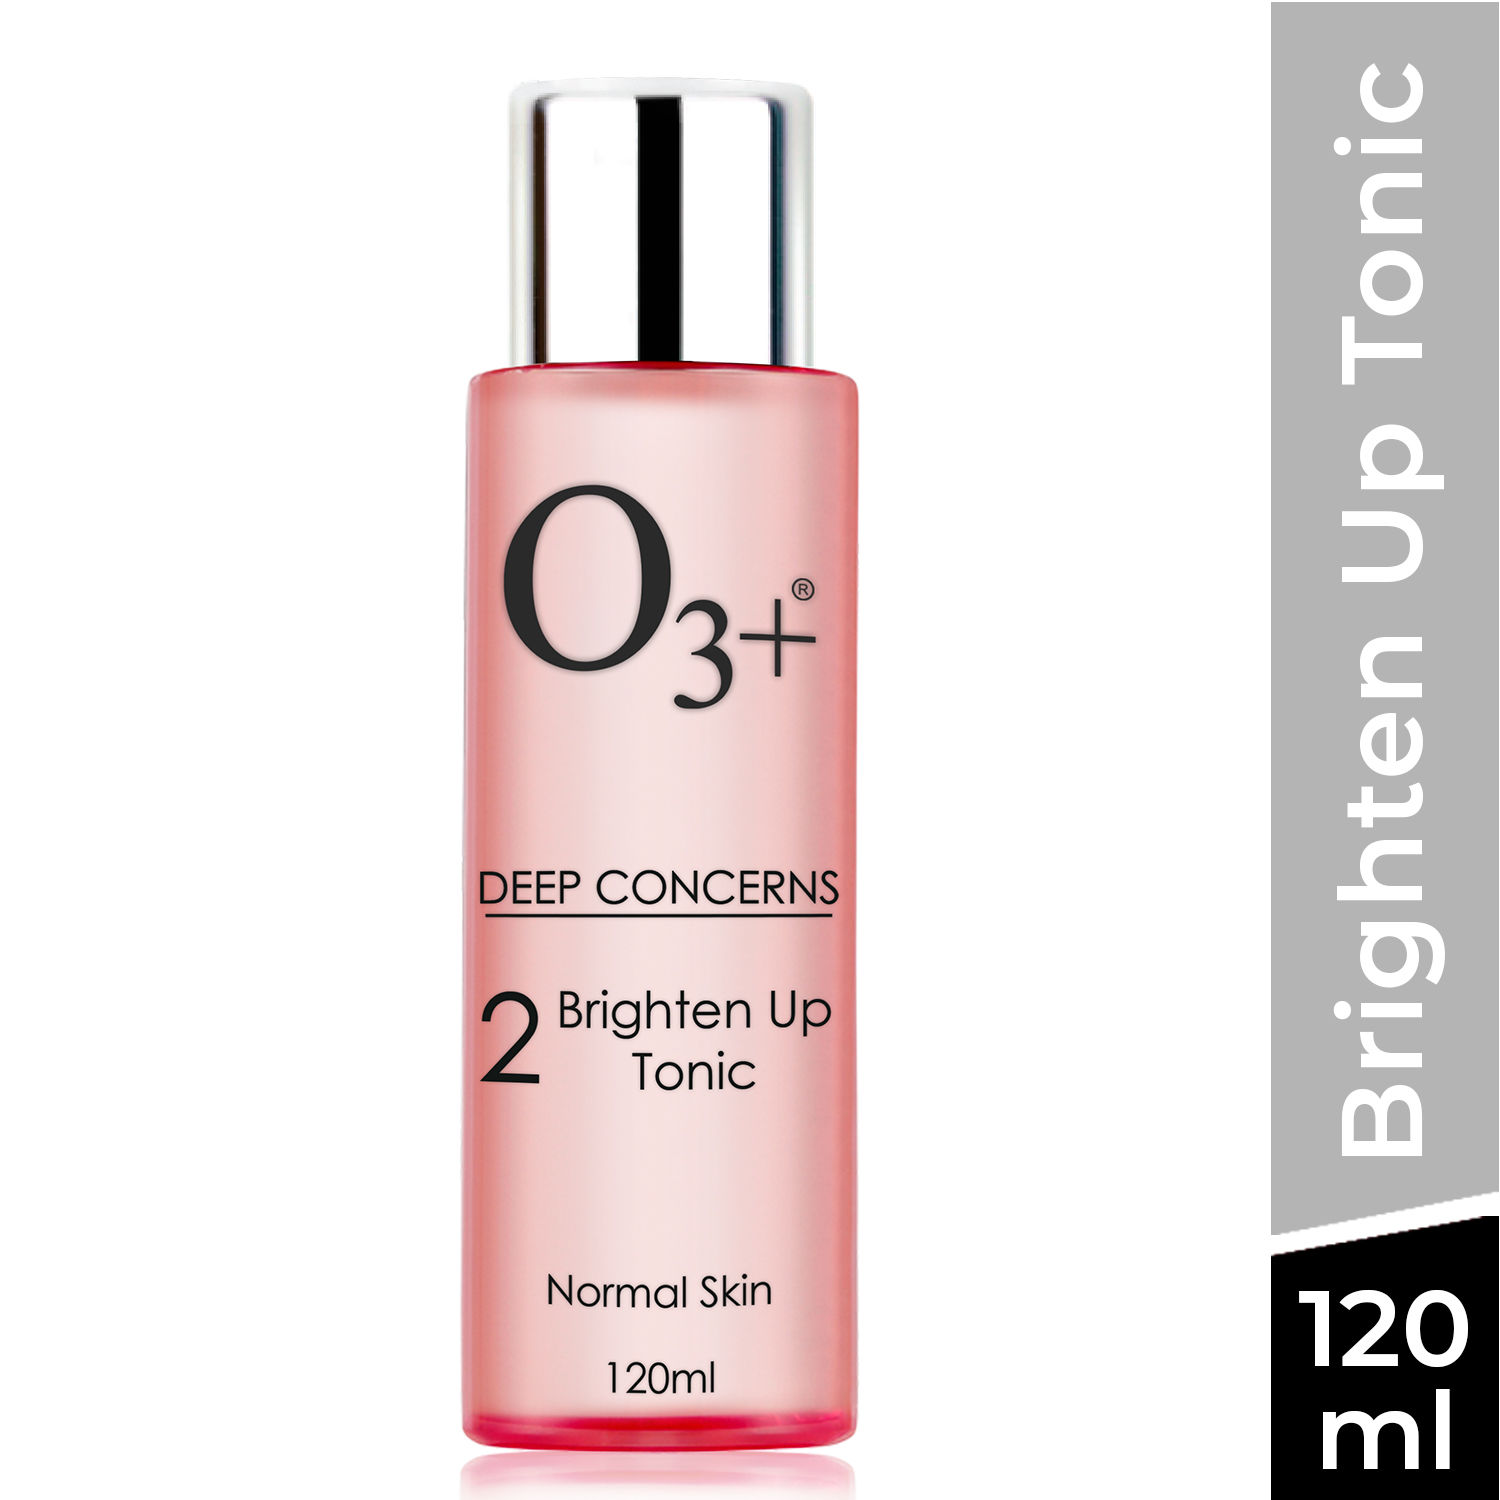 Buy O3+ 2 Brighten Up Tonic (120gm) - Purplle